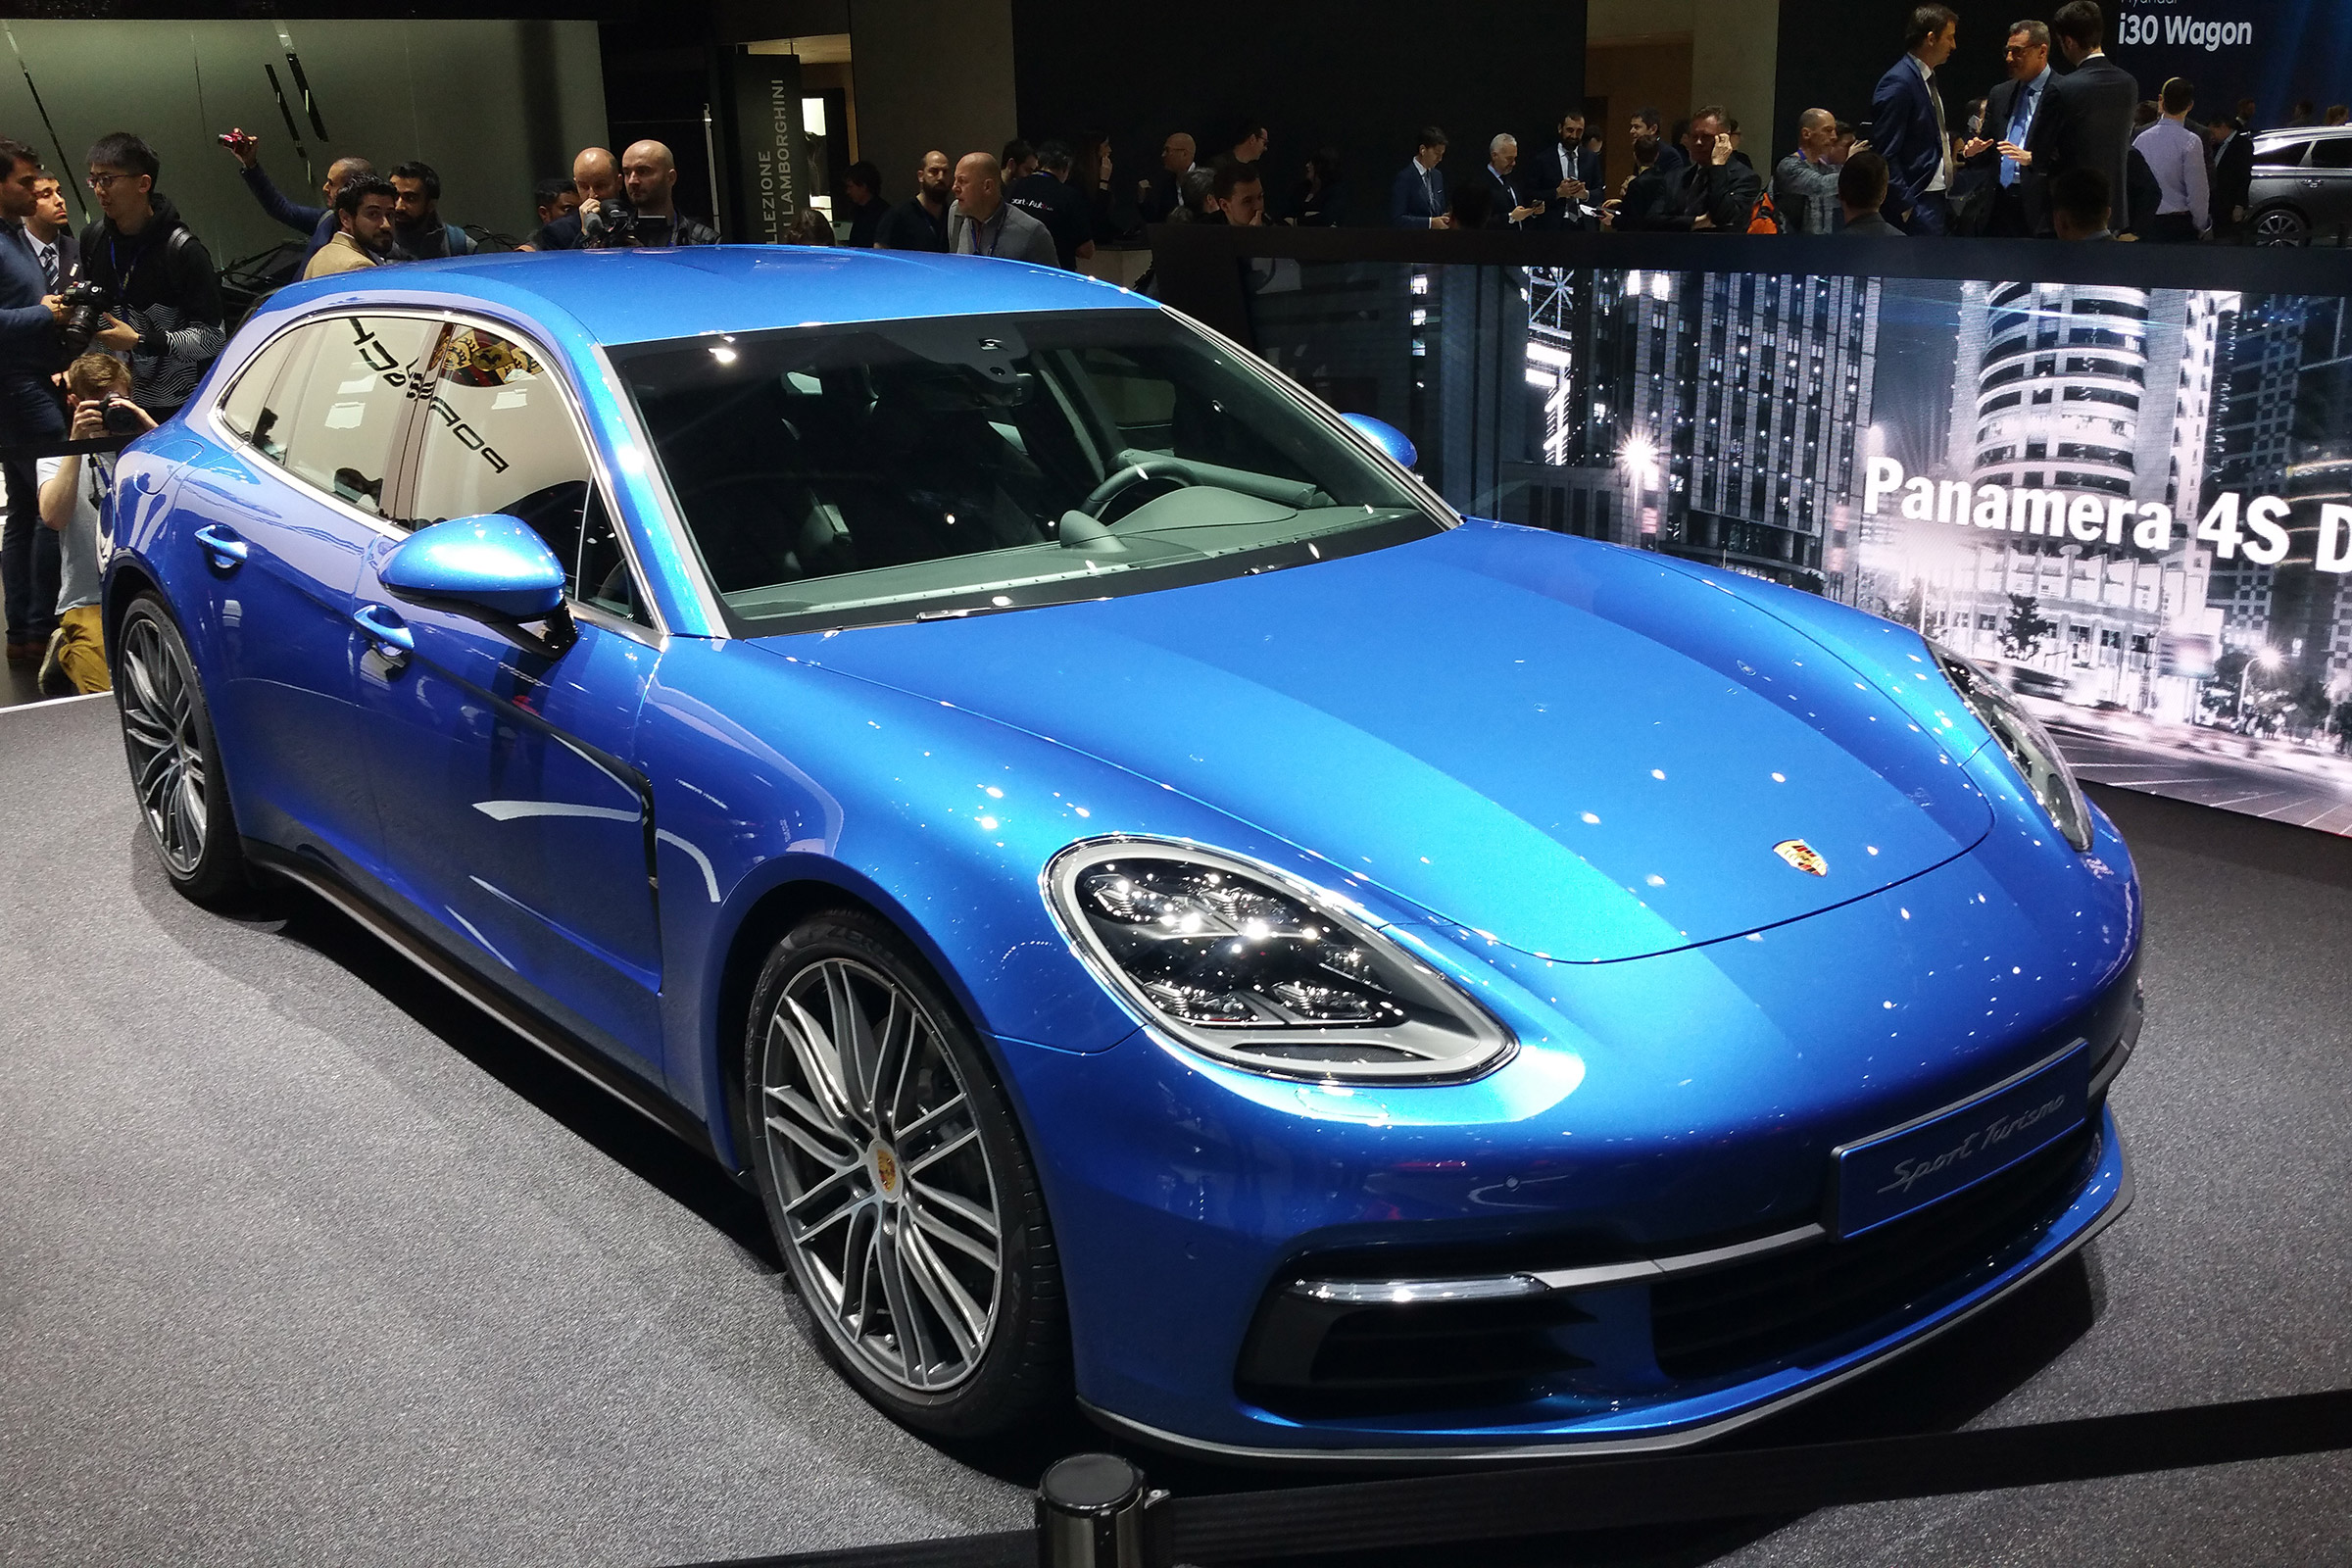 New Porsche Panamera Sport Turismo breaks cover at Geneva Motor Show